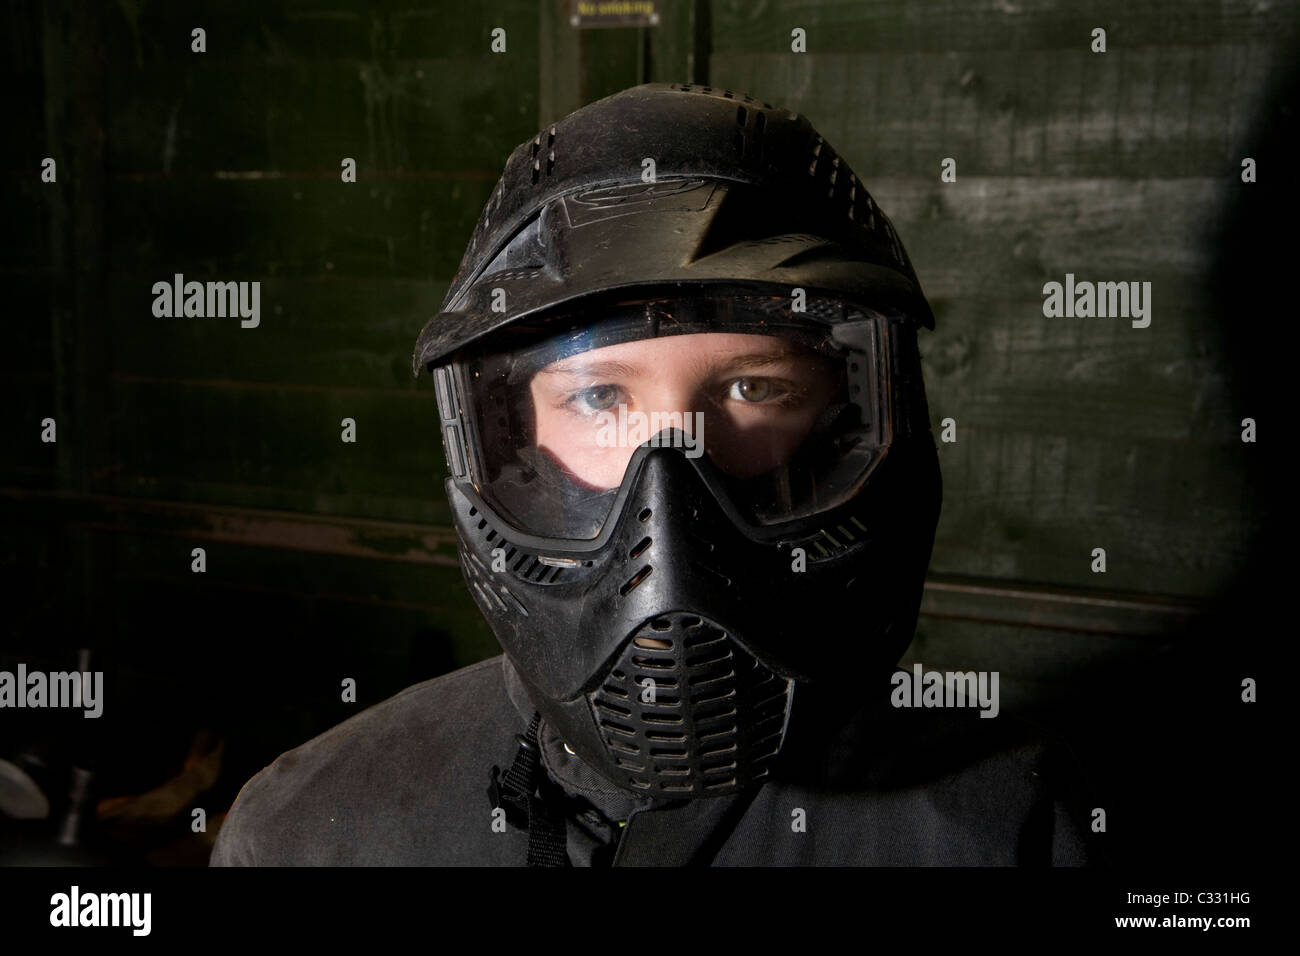 Paint balling safety gear helmet Stock Photo